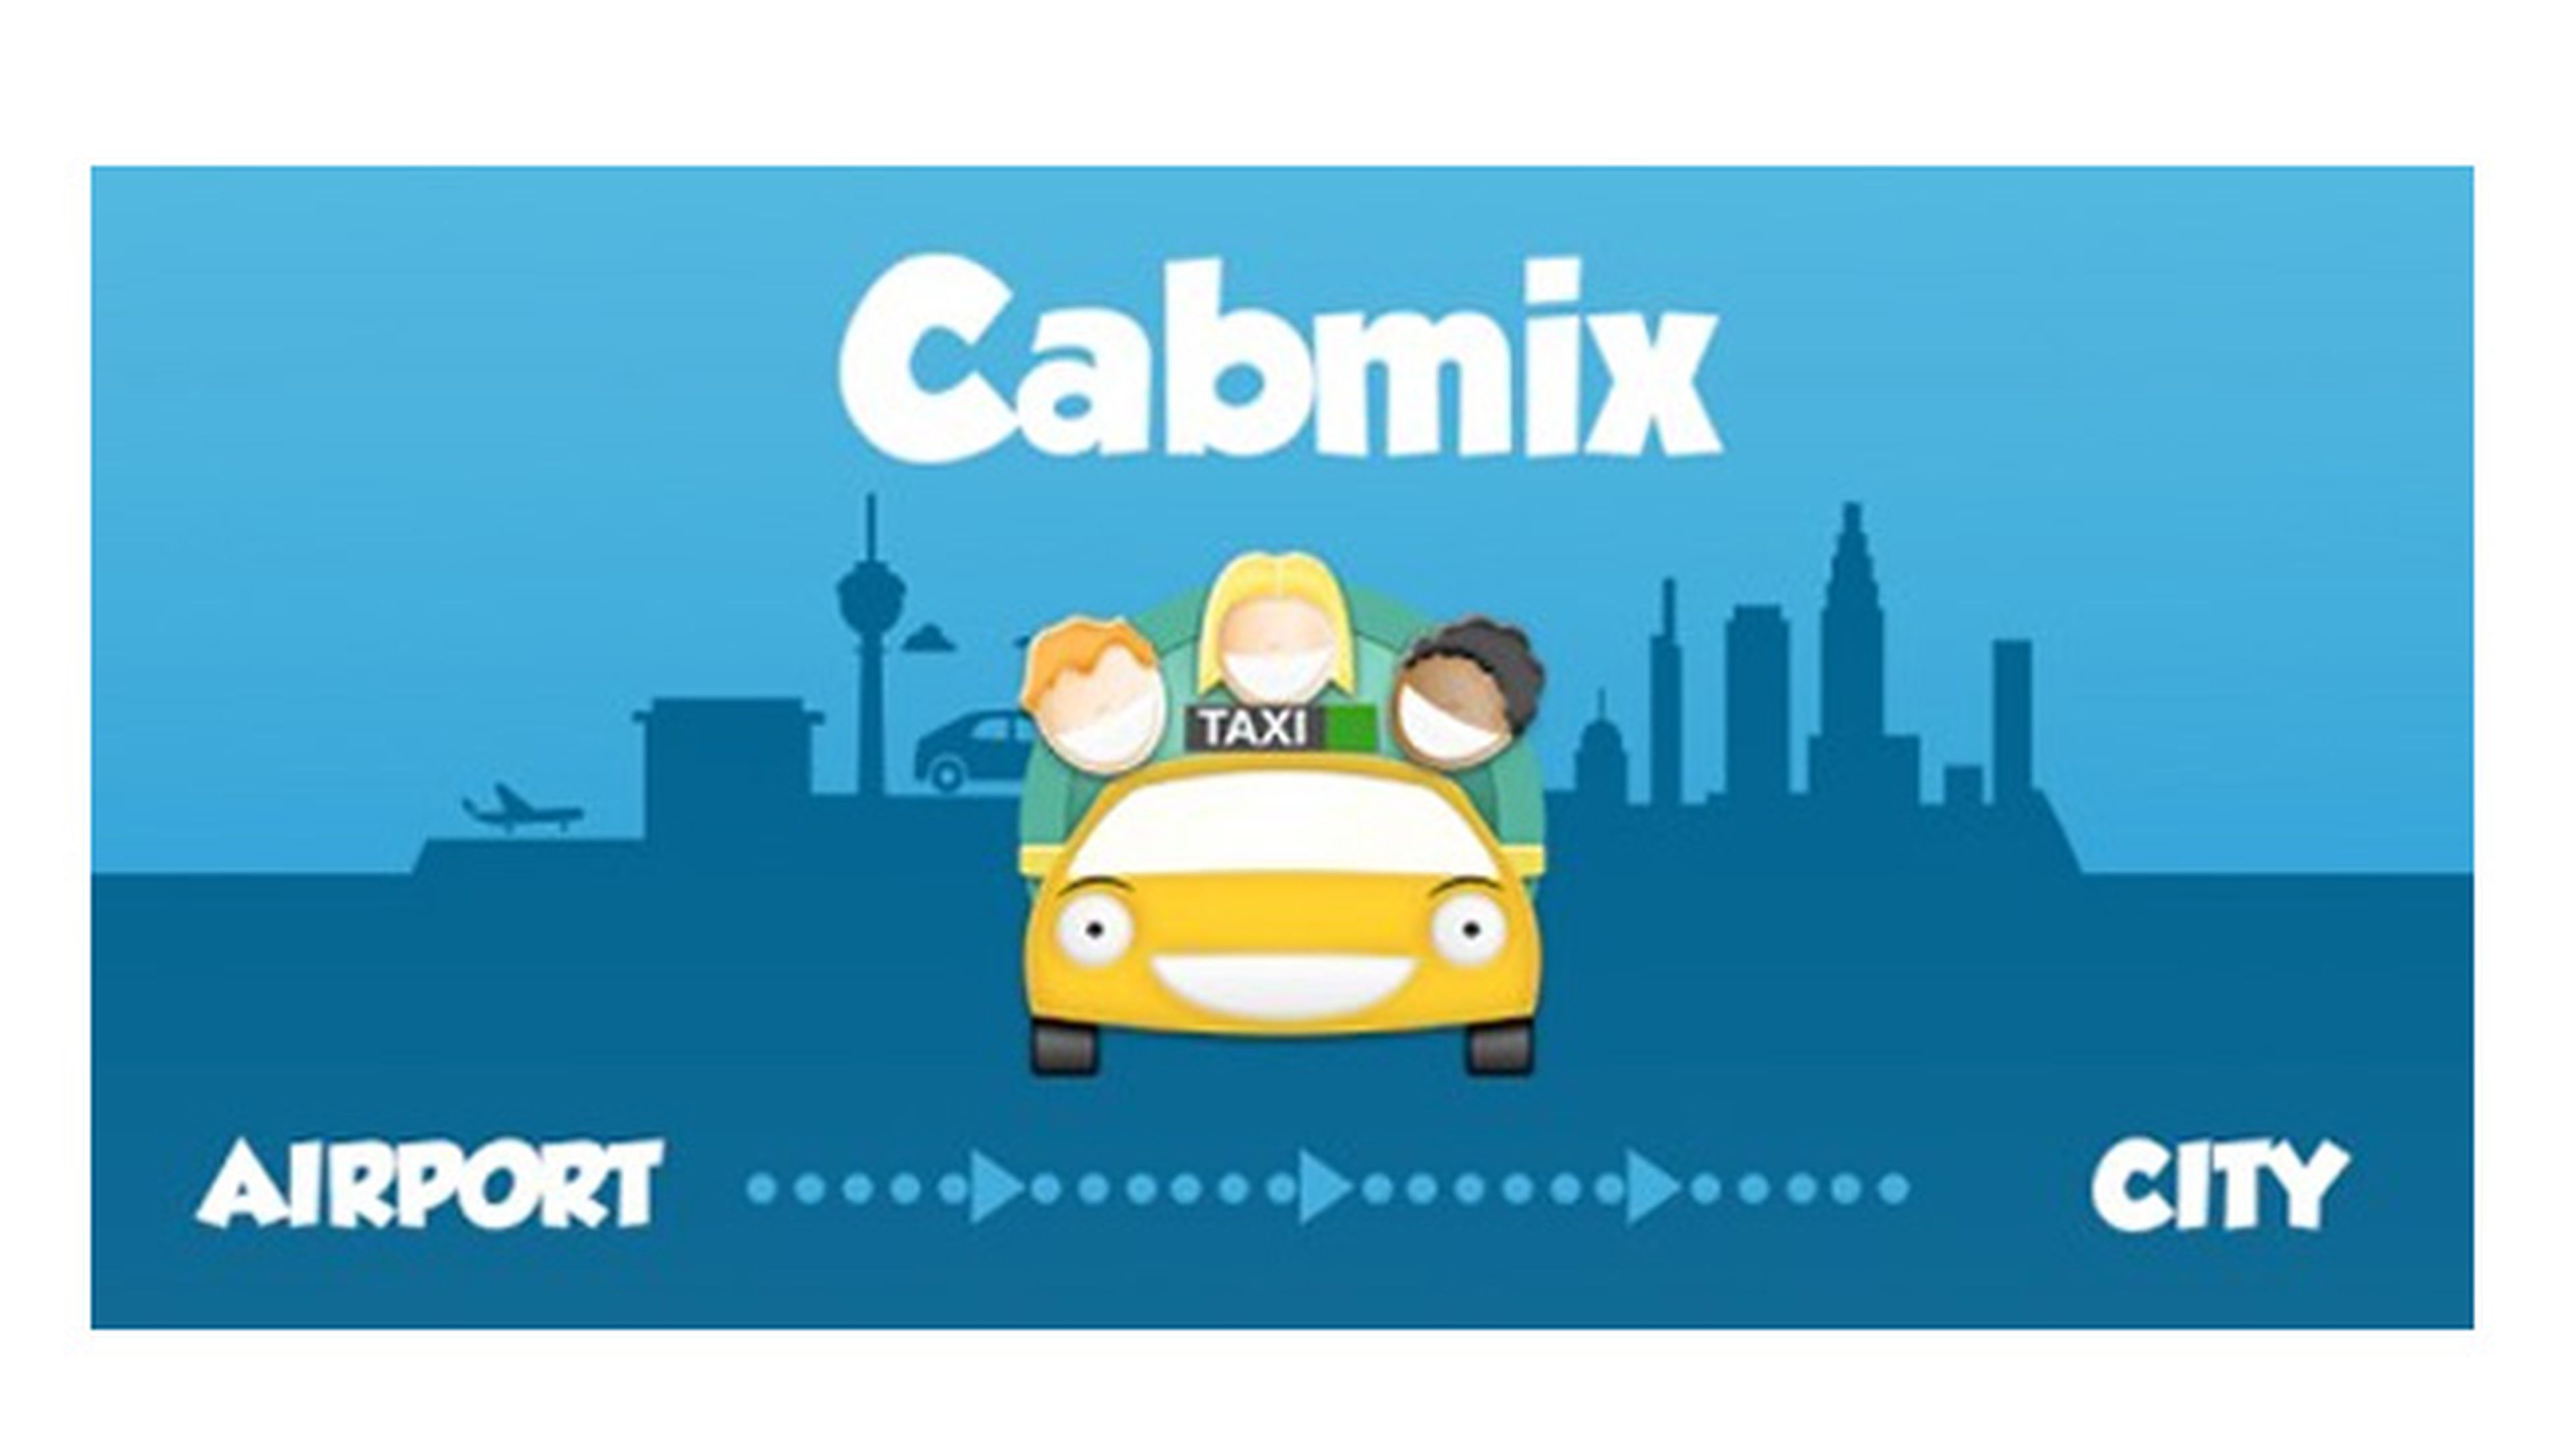 Cabmix